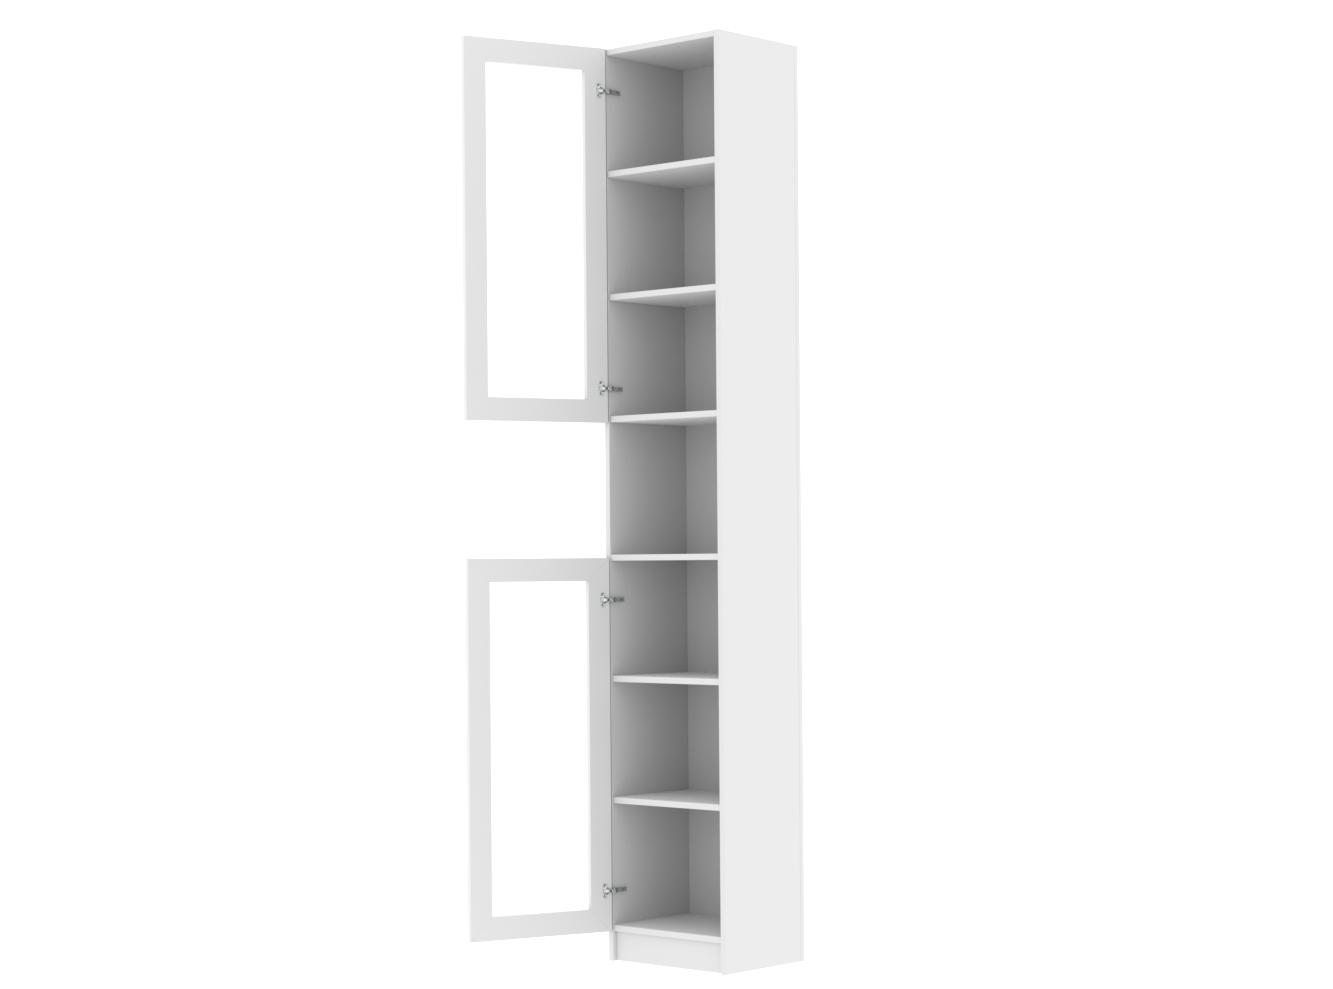  Книжный шкаф Билли 379 white ИКЕА (IKEA) изображение товара